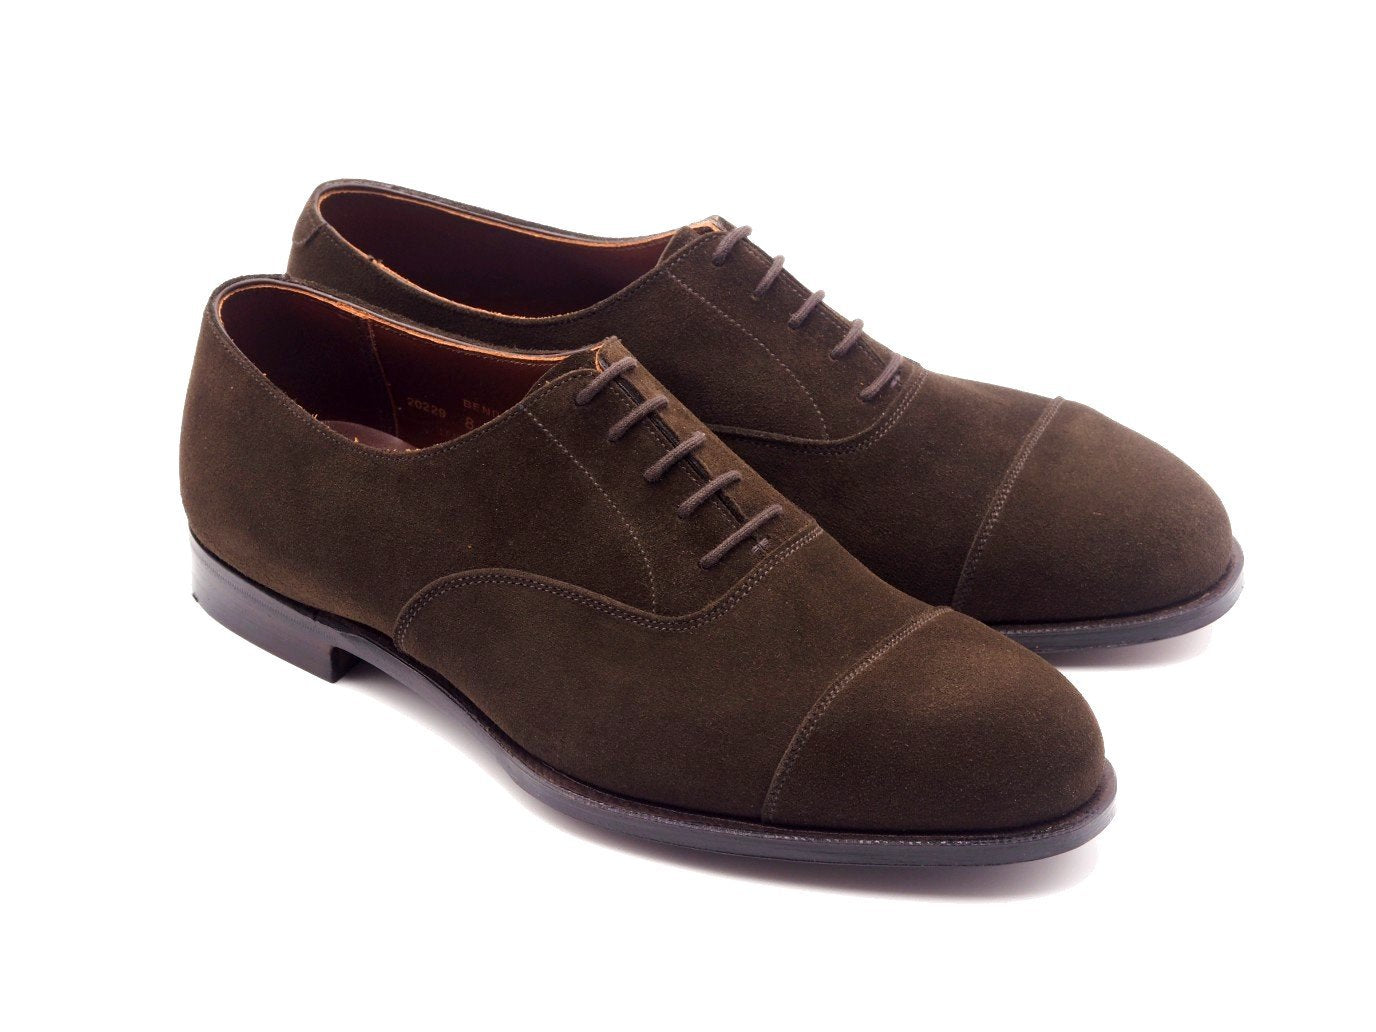 Front angle view of Crockett & Jones Bendigo plain captoe oxford shoes in dark brown suede